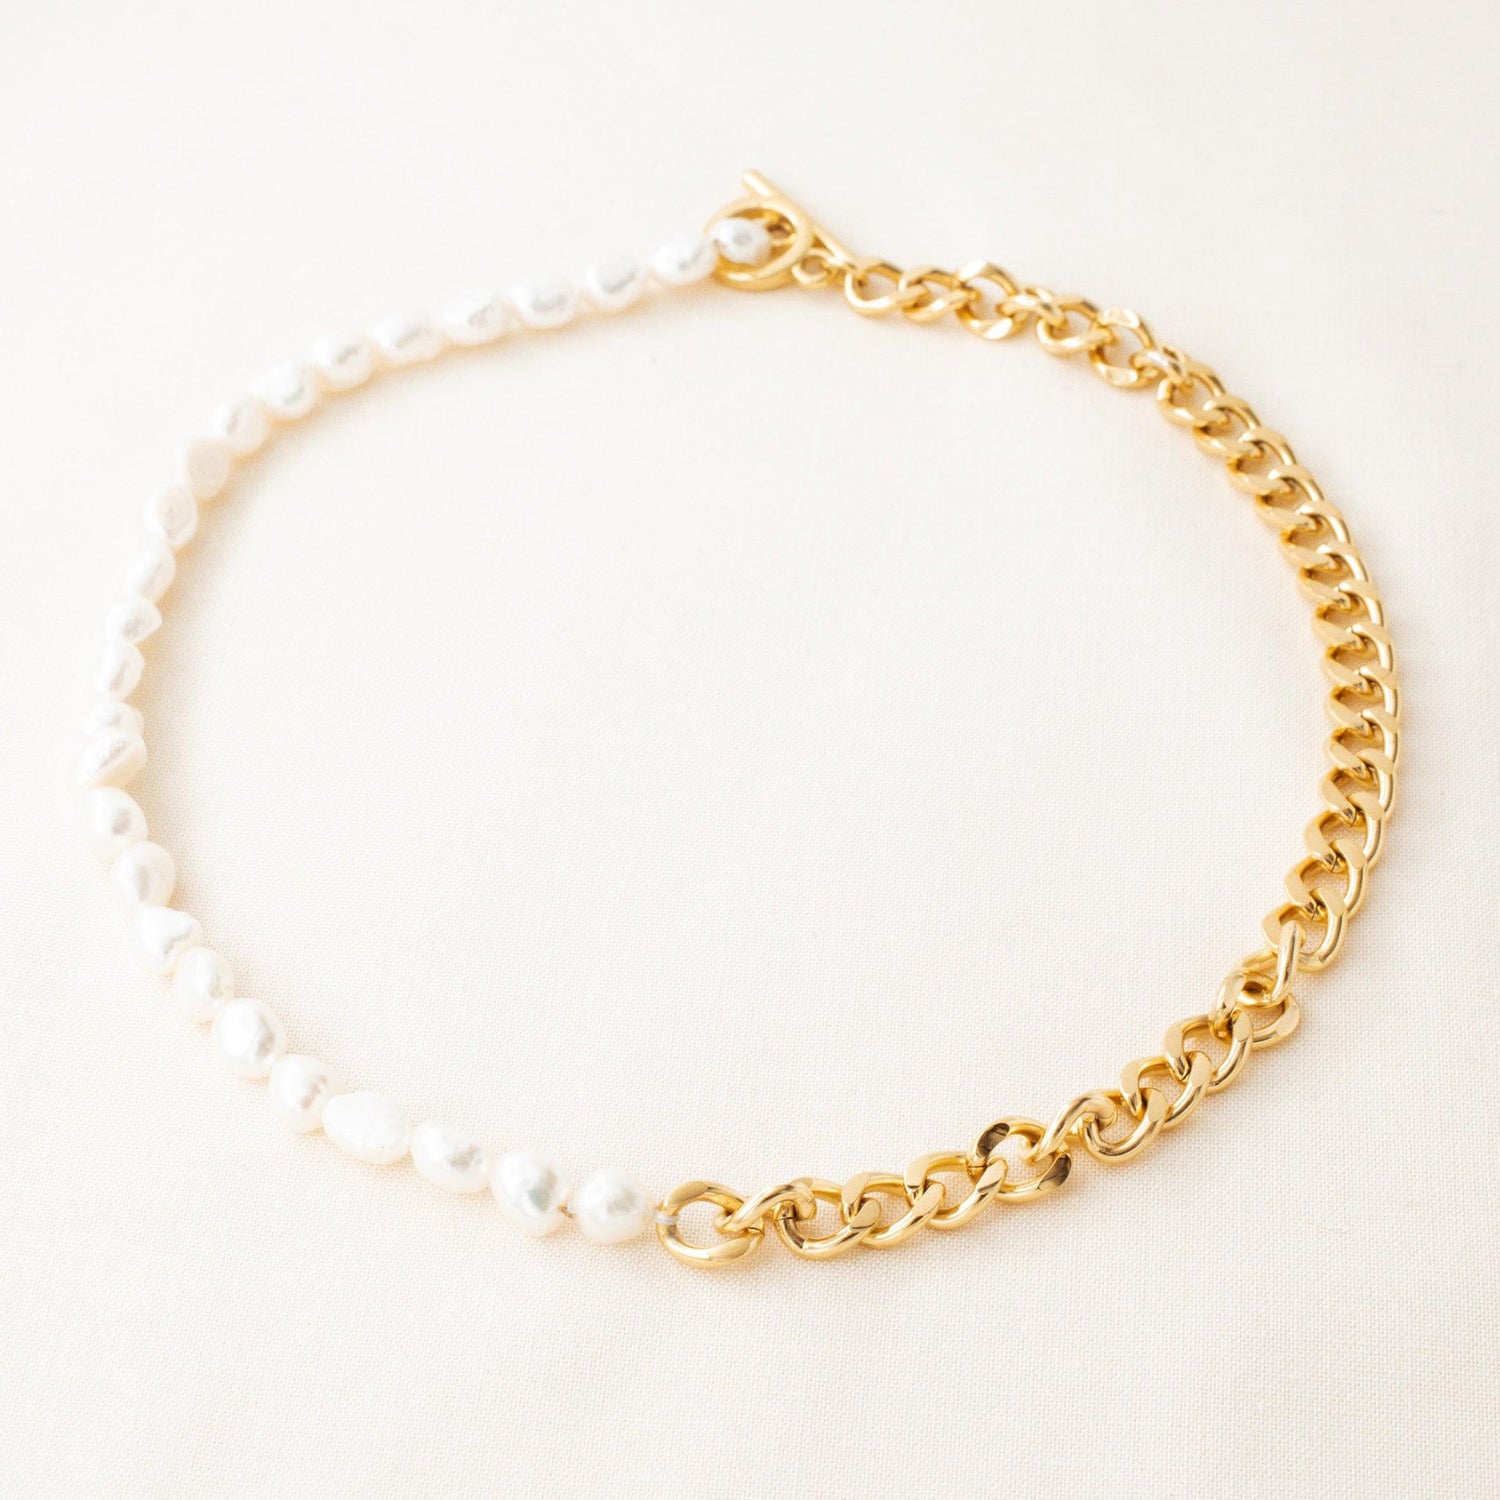 Gwen Gold Chain &amp; Pearl Necklace - avantejewel.com